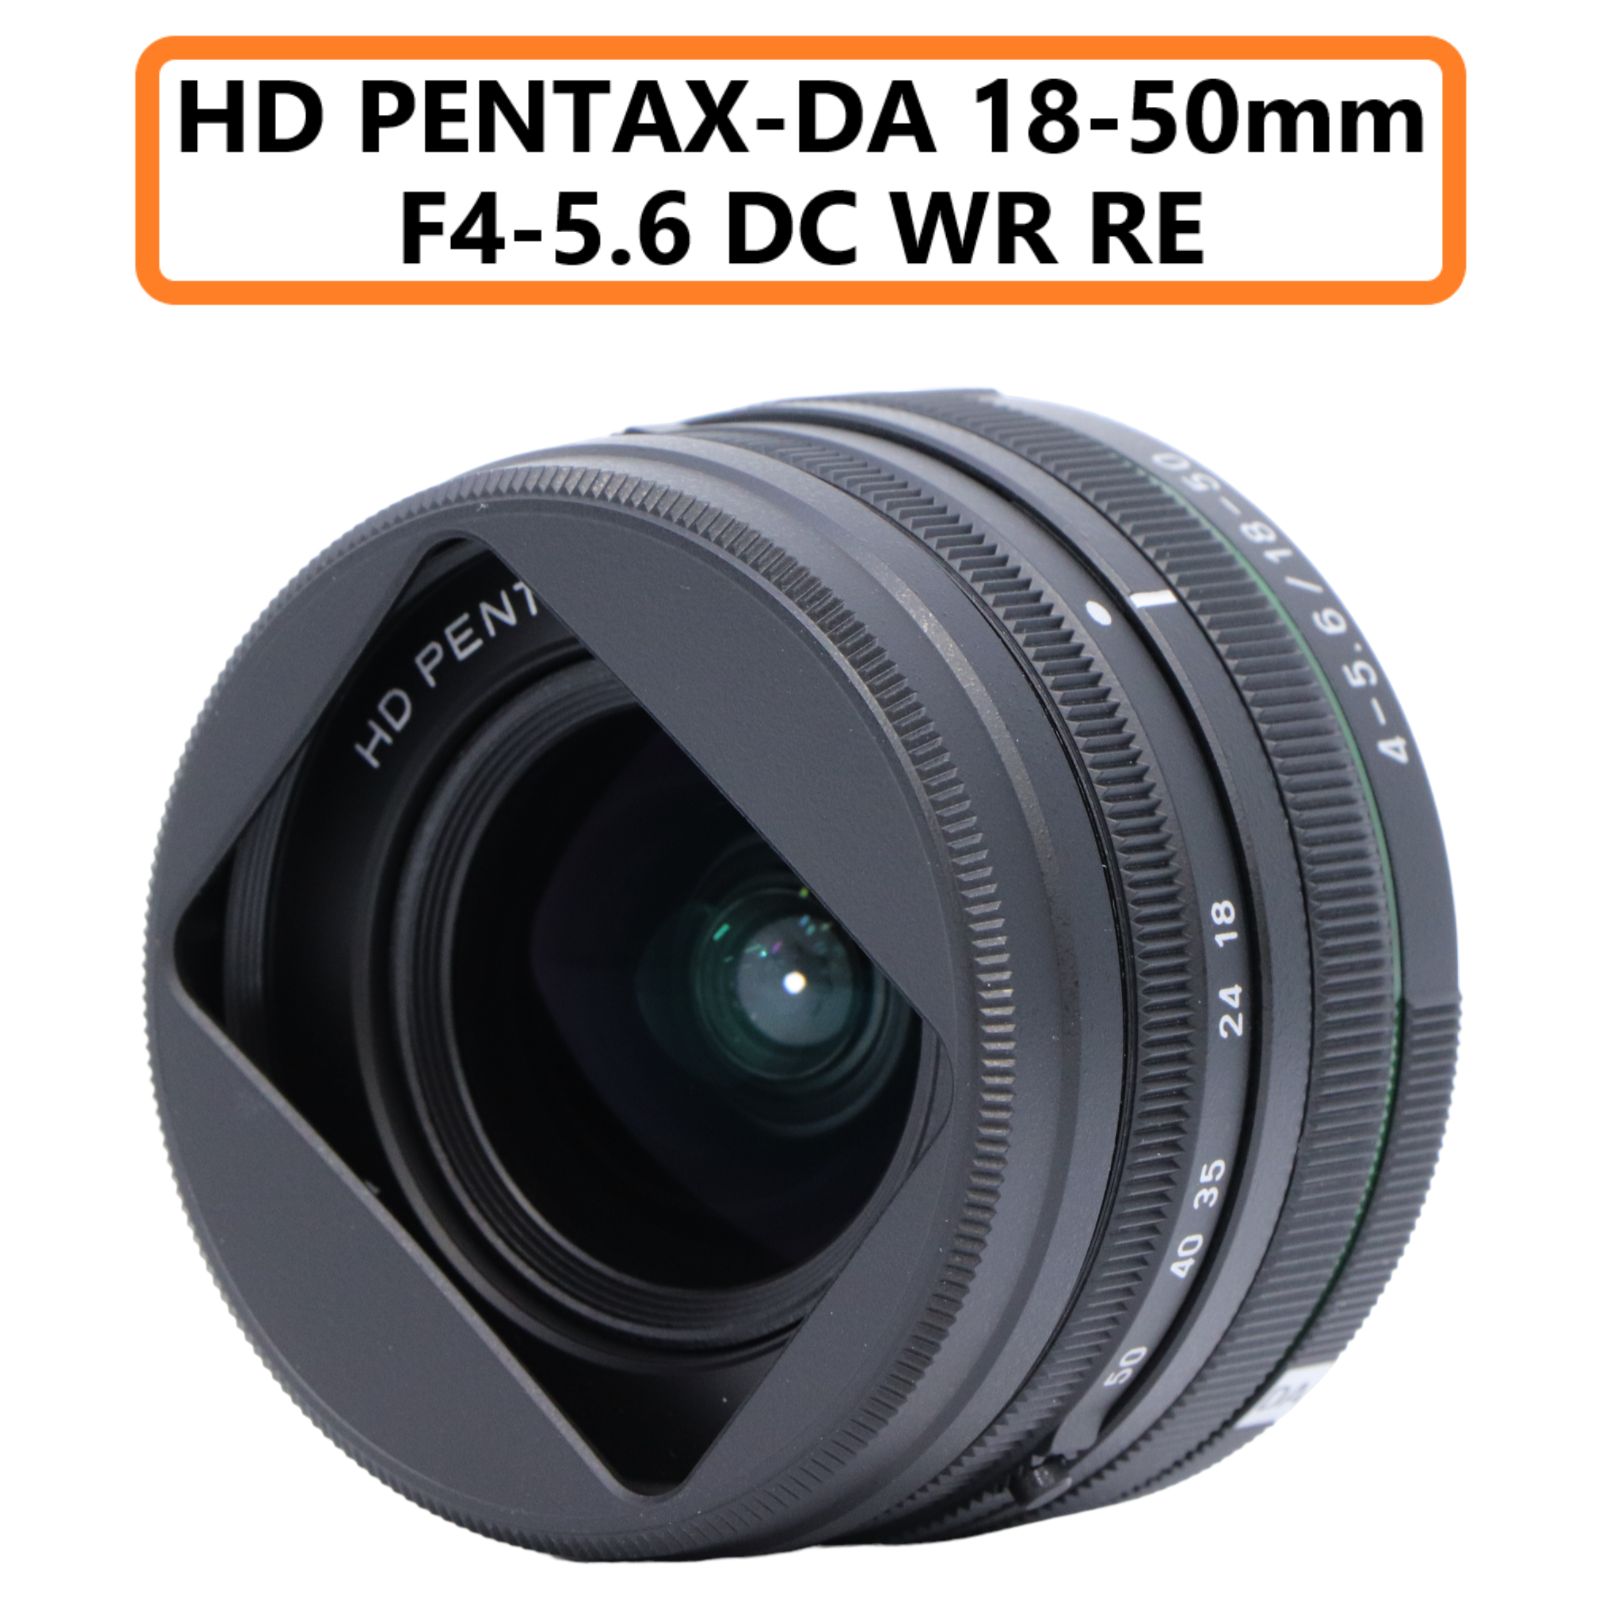 RICOH リコー HD PENTAX-DA 18-50mmF4-5.6 DC WR RE ペンタックス 標準